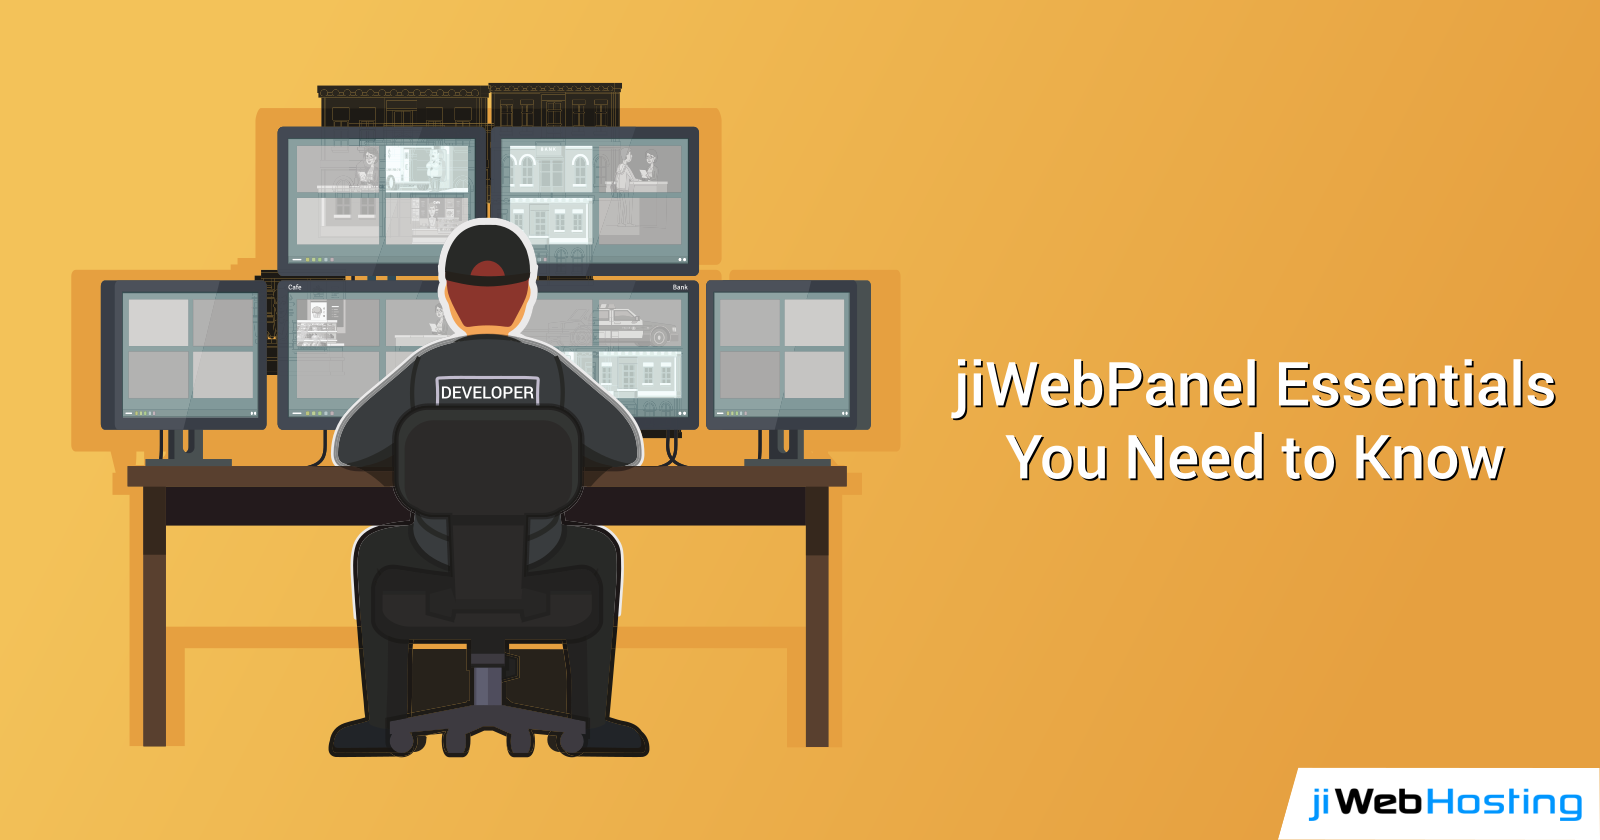 Managing Your Web Server Using jiWebPanel